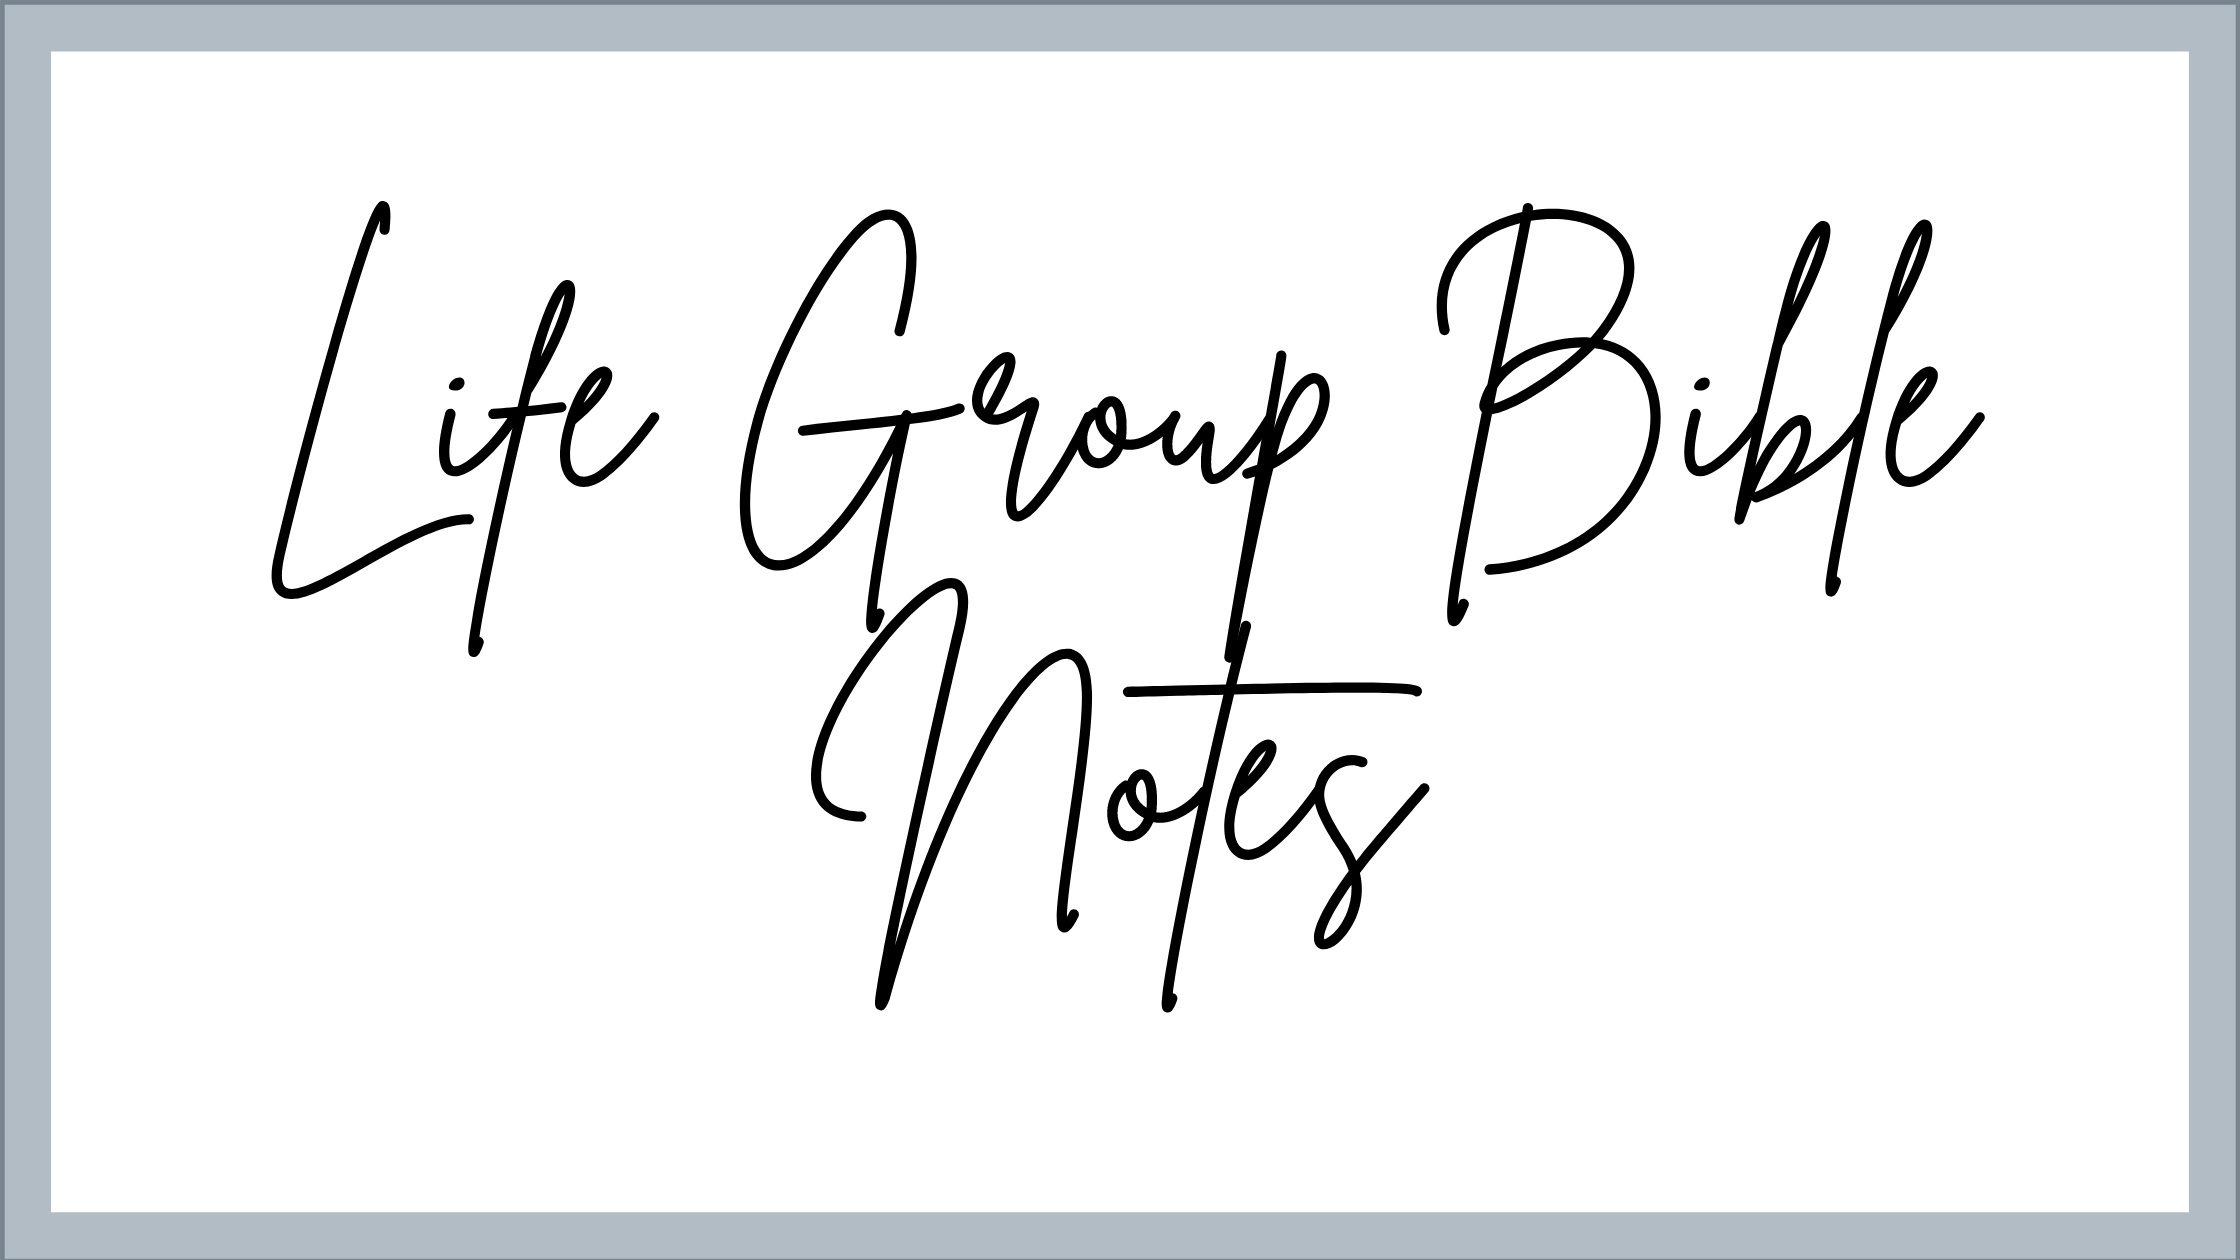 Life Group Notes for Sunday 25 April – 1 John 3